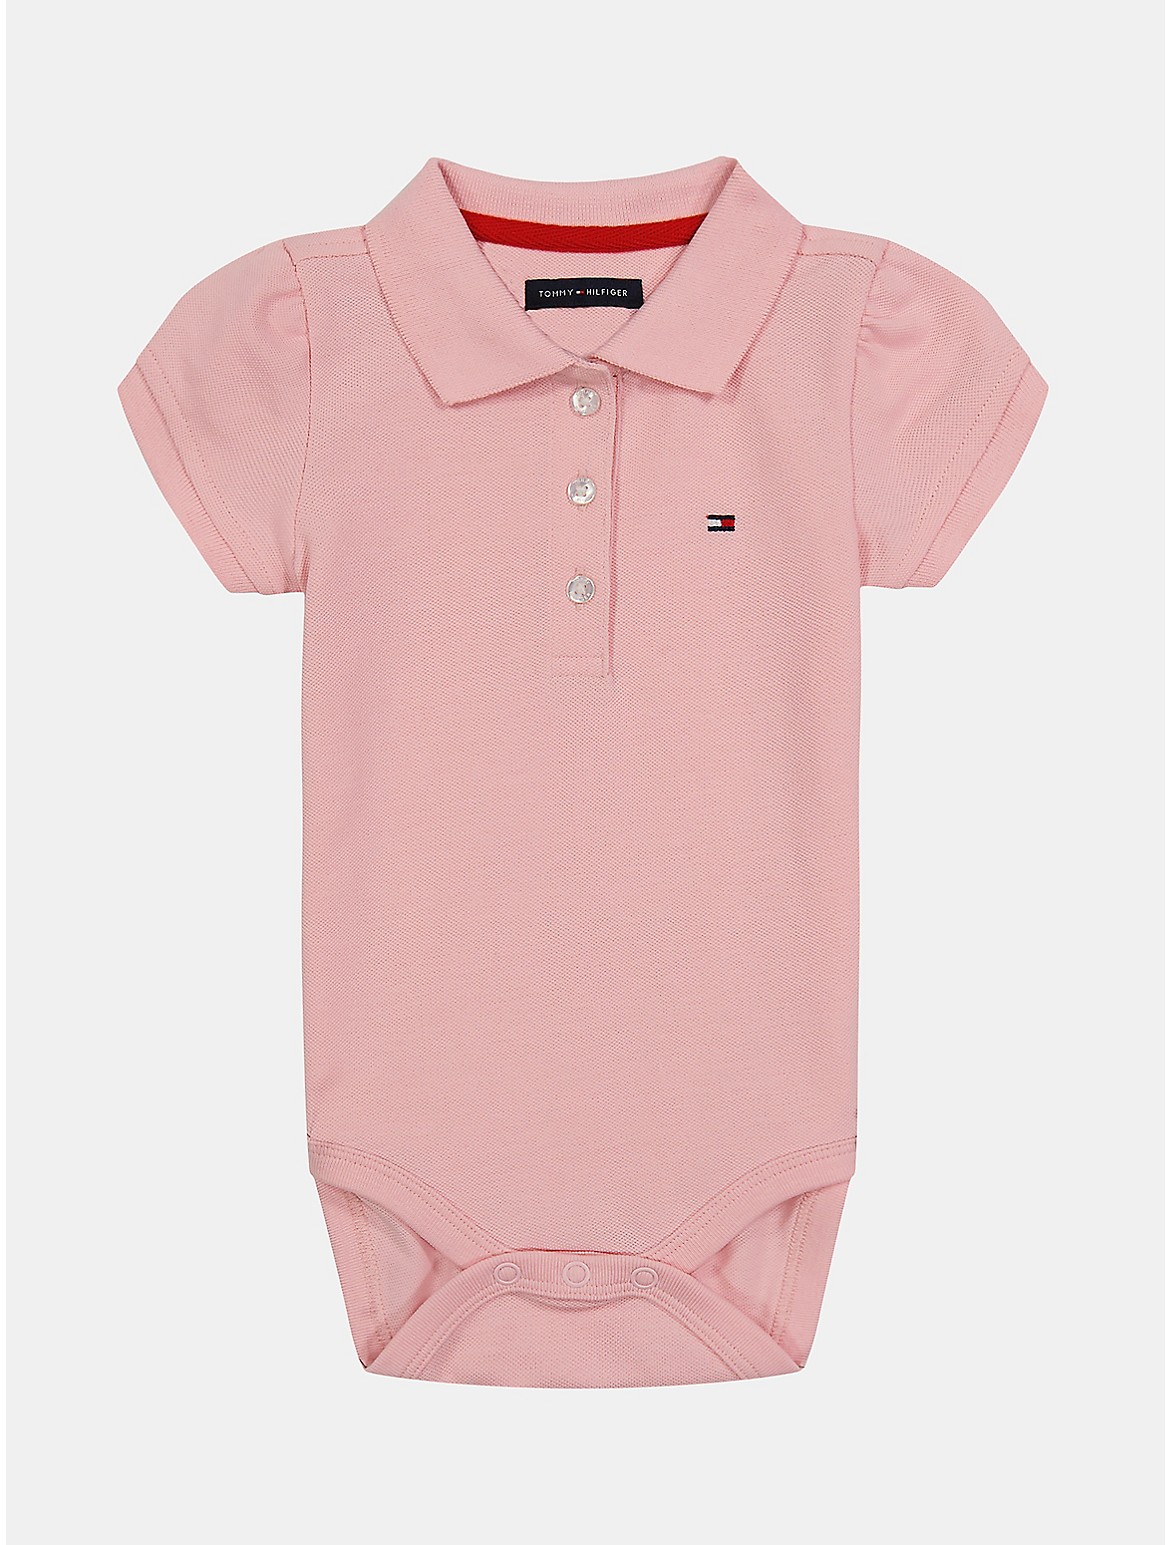 Tommy Hilfiger Girls' Babies' Solid Bodysuit - Pink - 3-6M